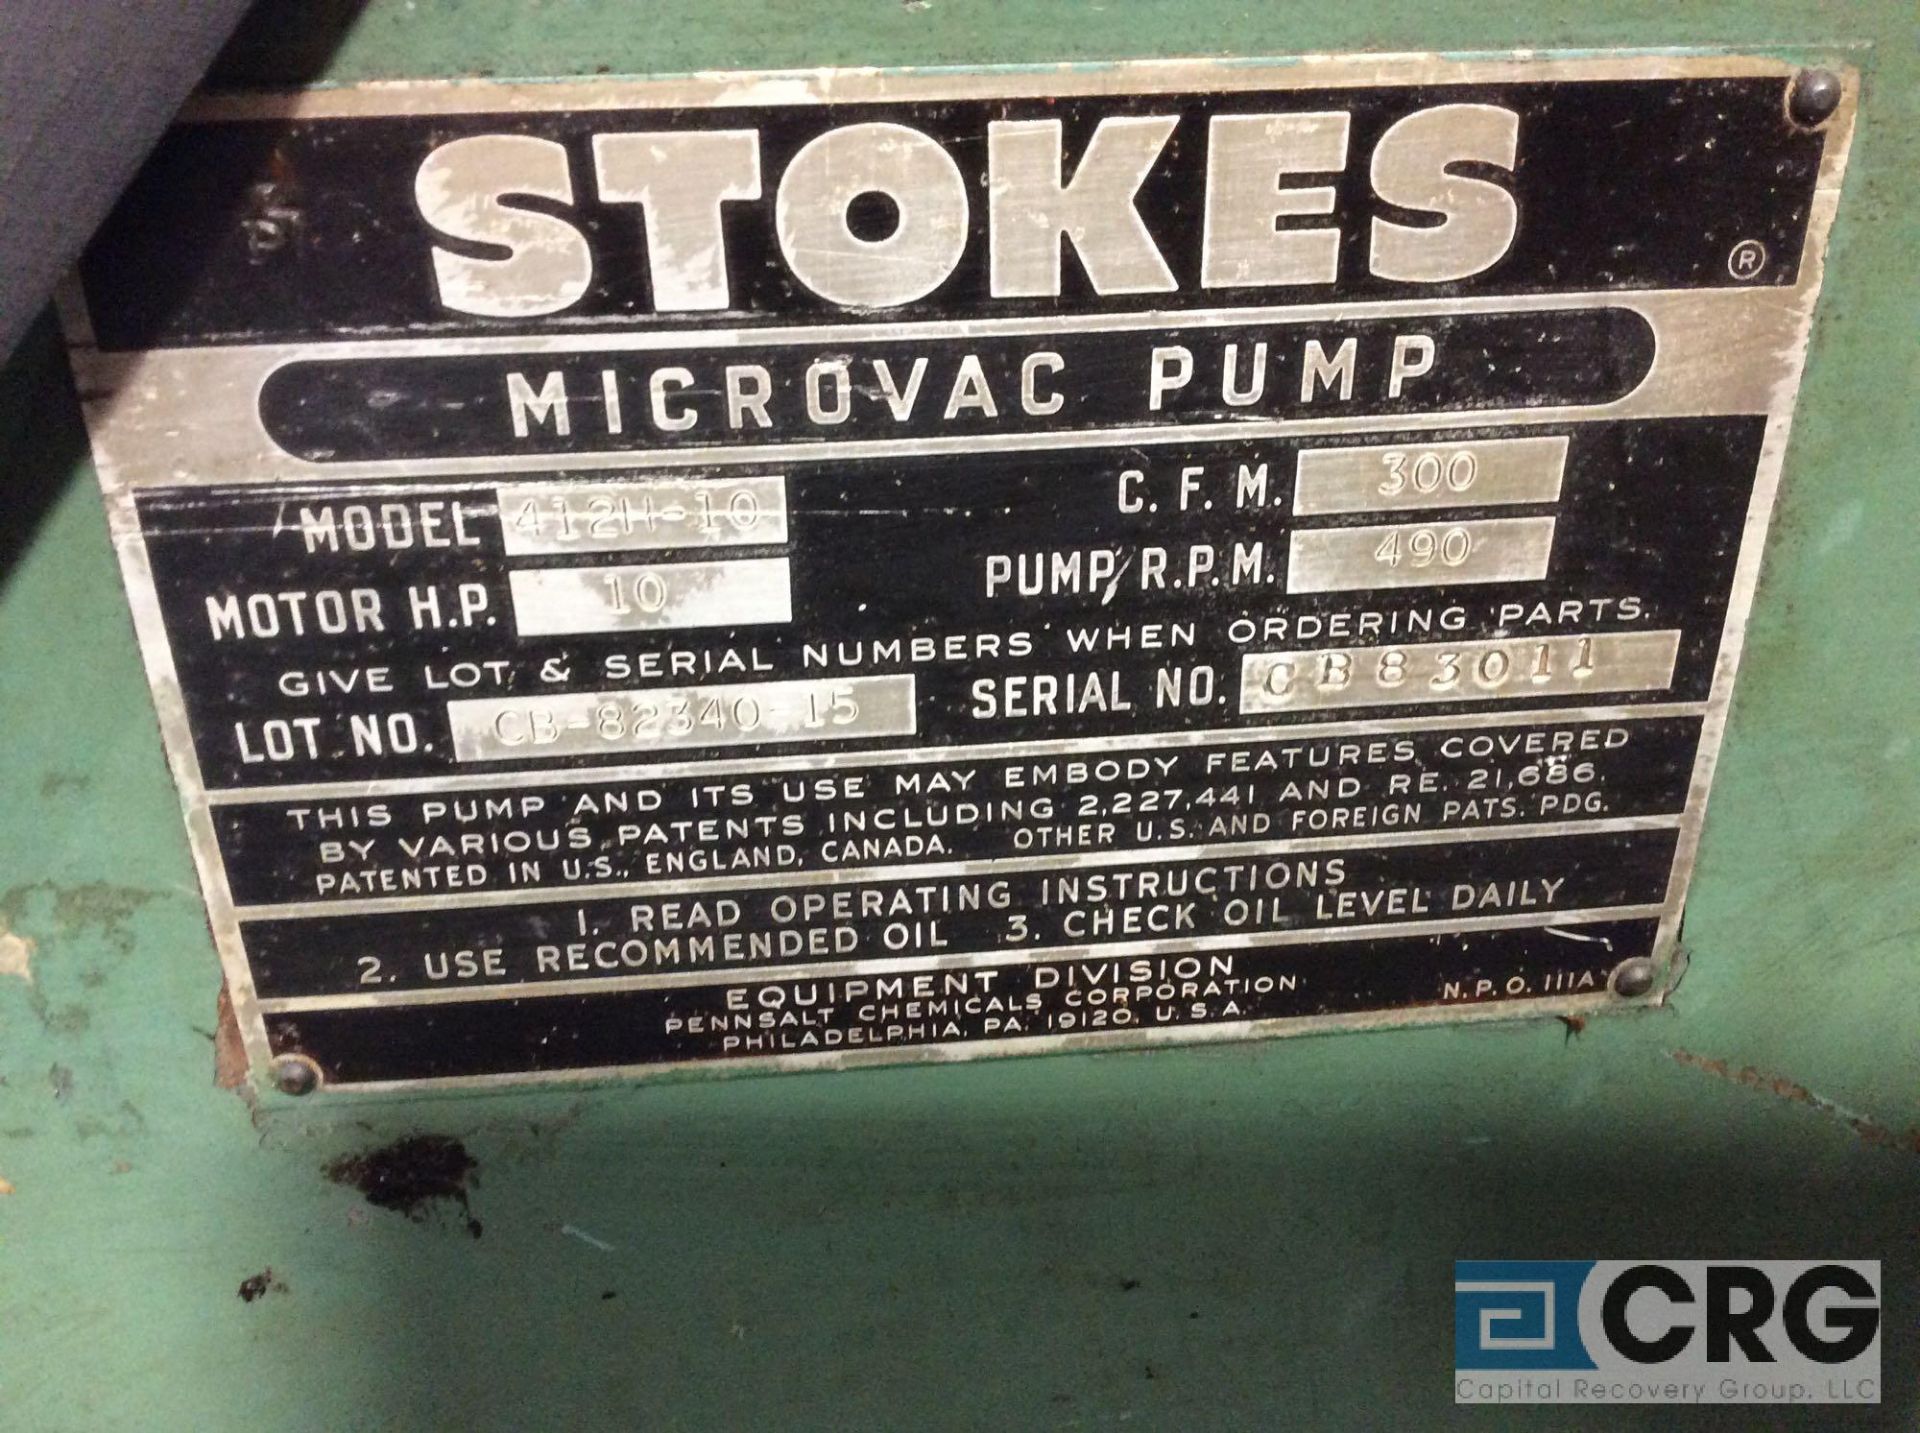 Stokes mcrovac pump, mn 412H-10, 10 hp motor, 300 CFM - Image 3 of 4